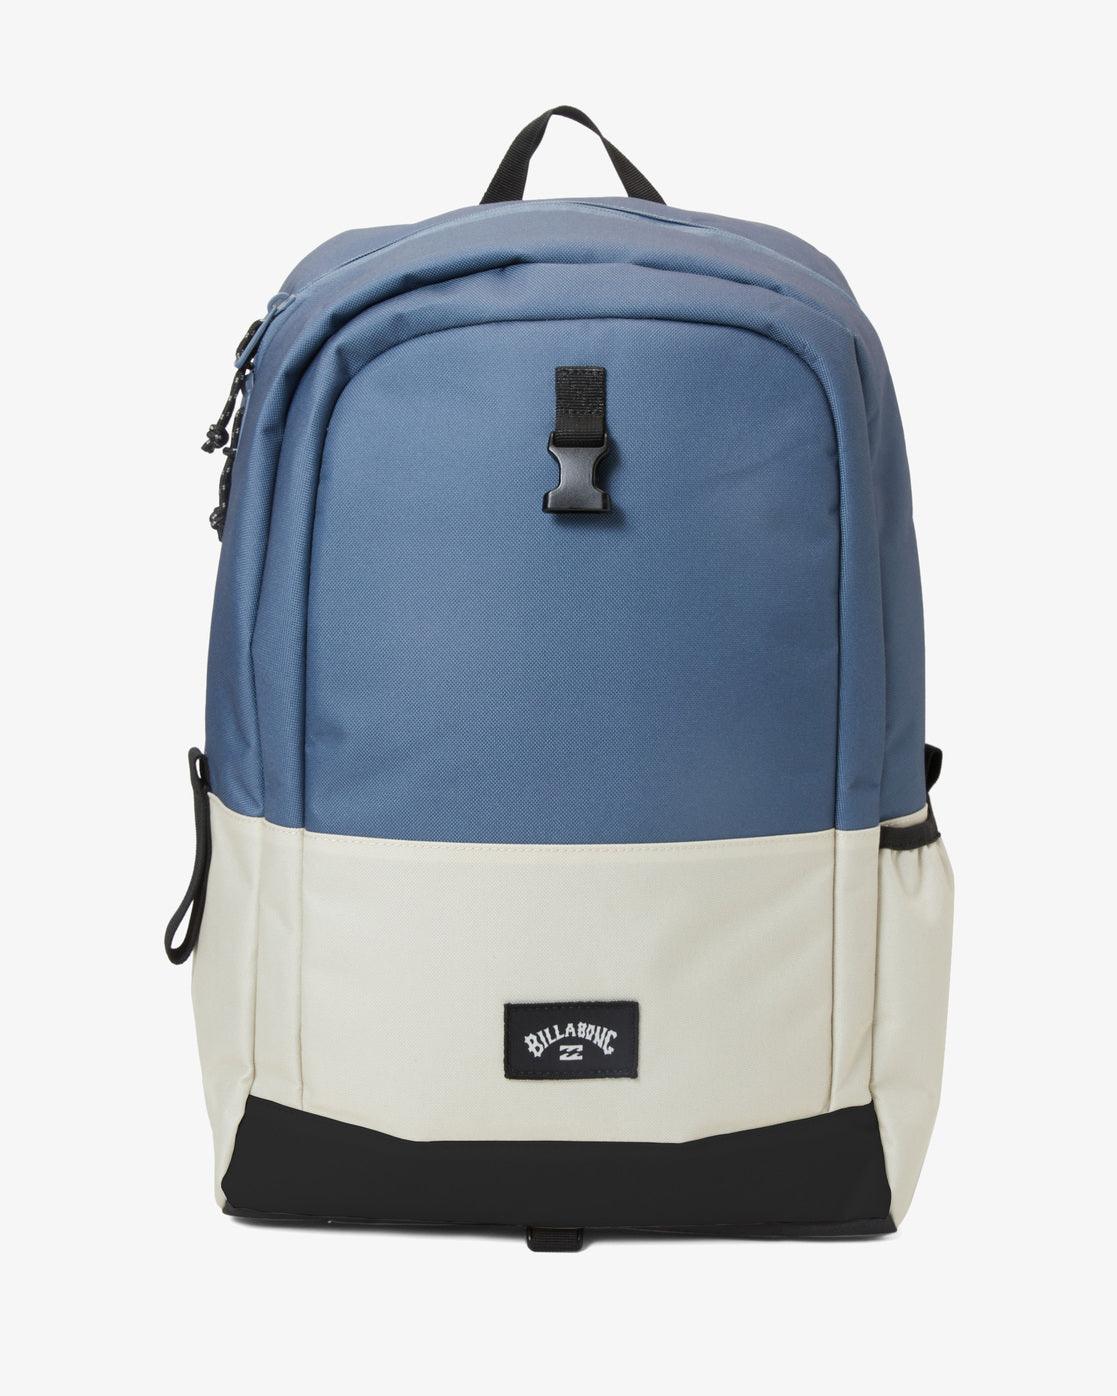 Command Duo 25L Backpack - SoHa Surf Shop